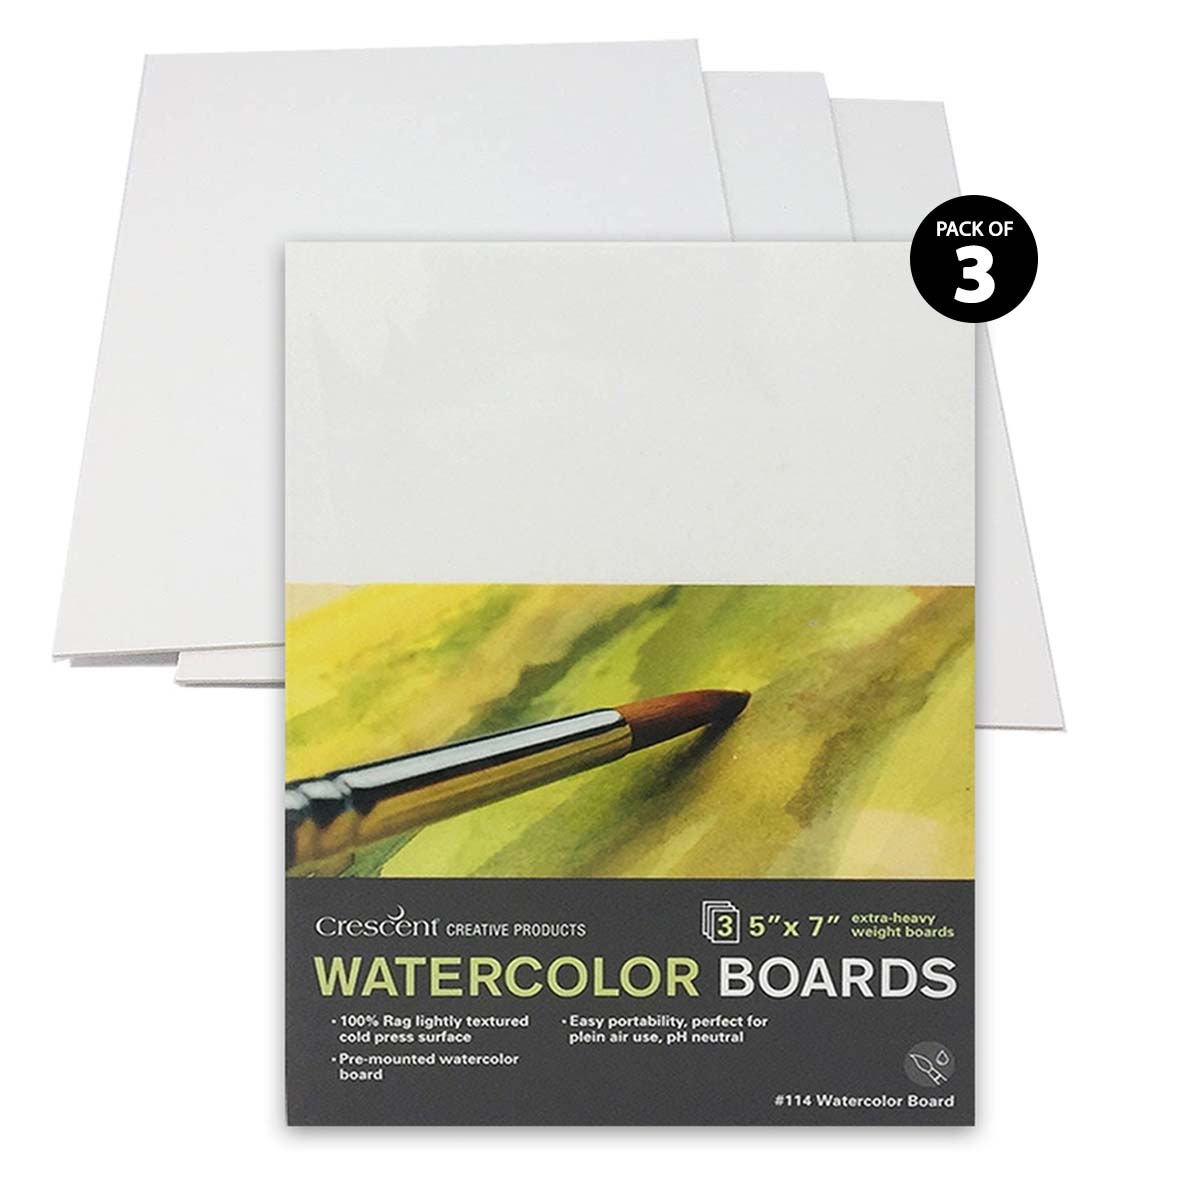 Strathmore Ready Cut Watercolor Paper 5x7 - 140lb Hot Press, 25 Sheets